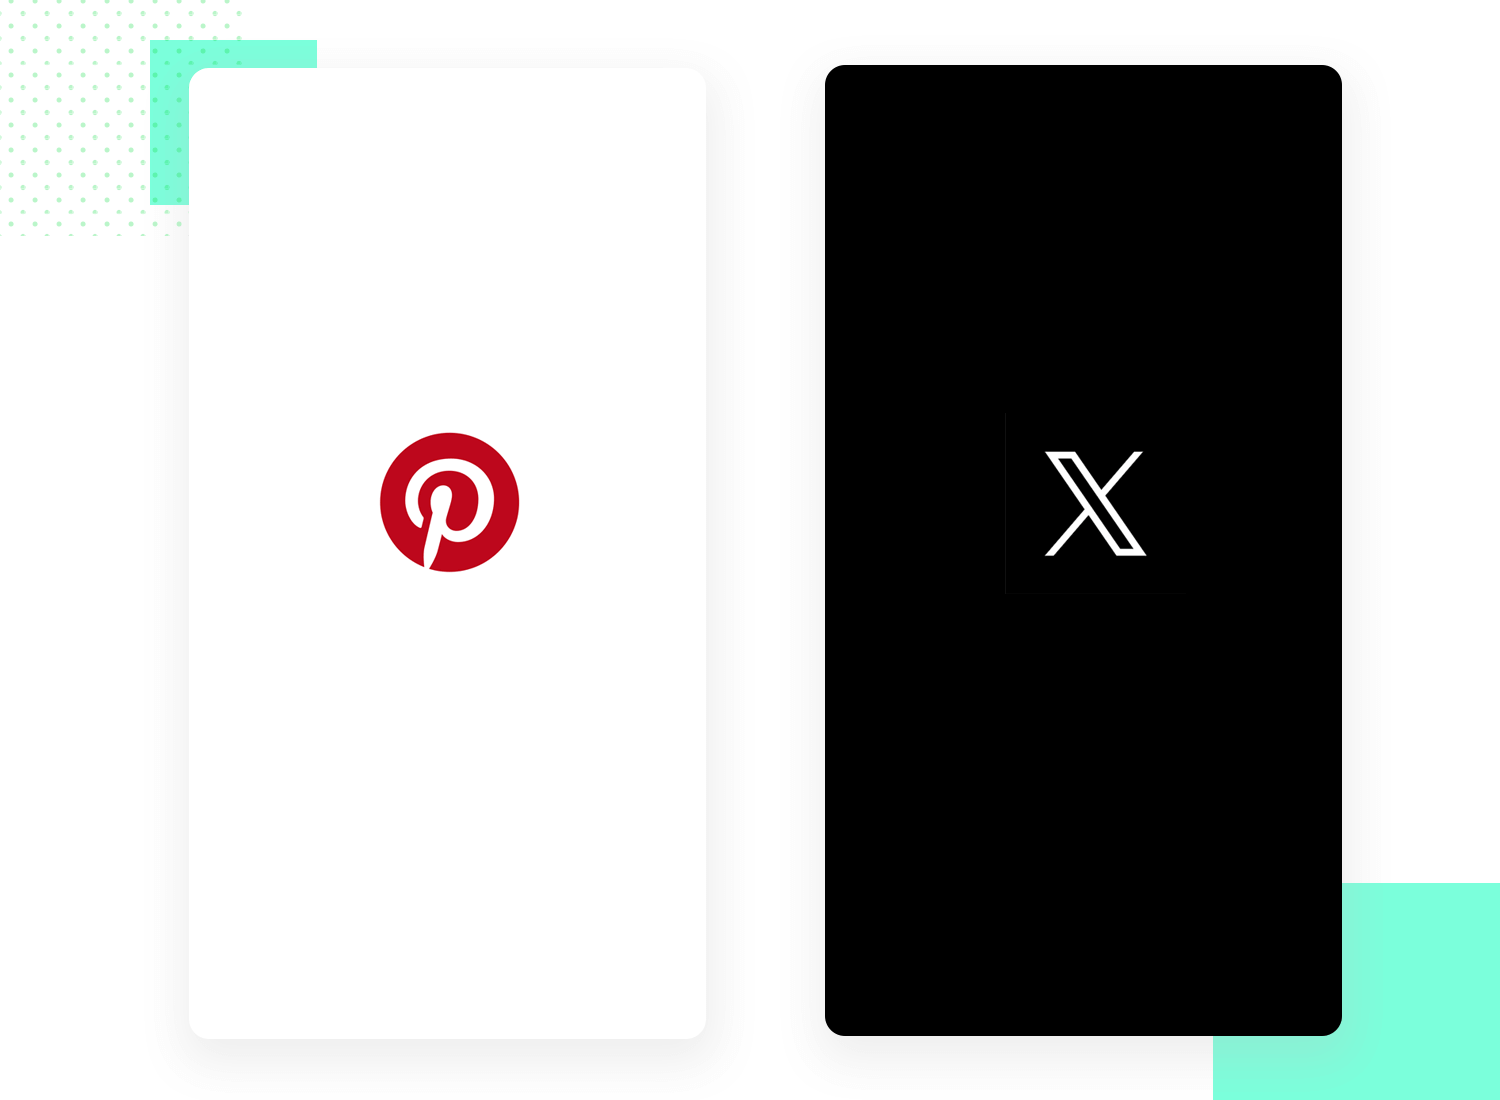 Pinterest and X splash screen examples